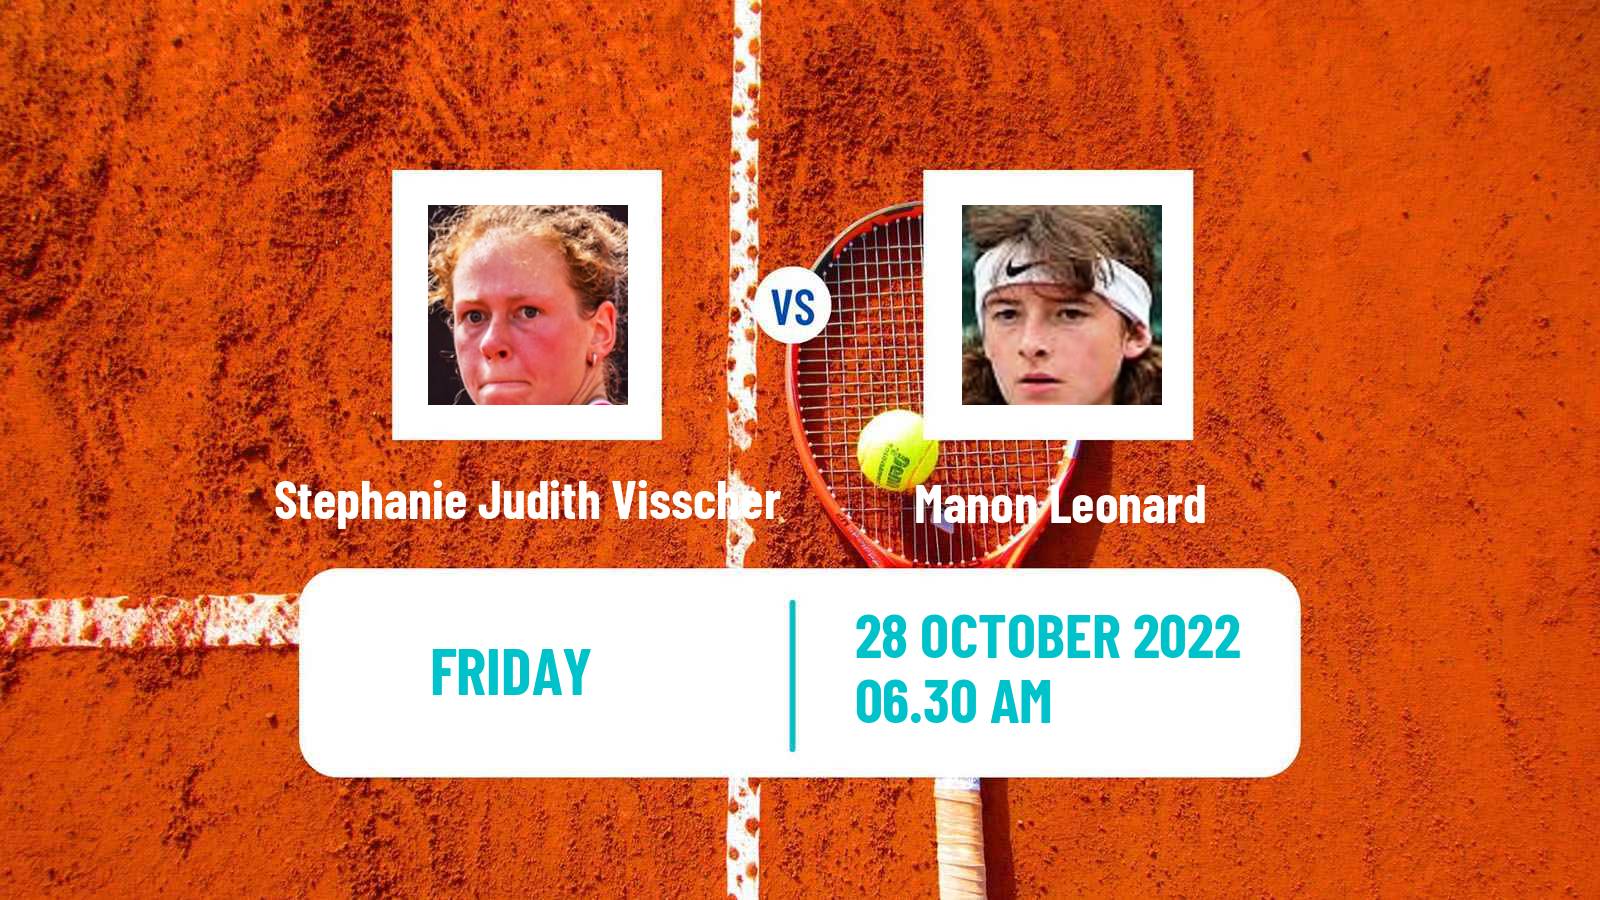 Tennis ITF Tournaments Stephanie Judith Visscher - Manon Leonard